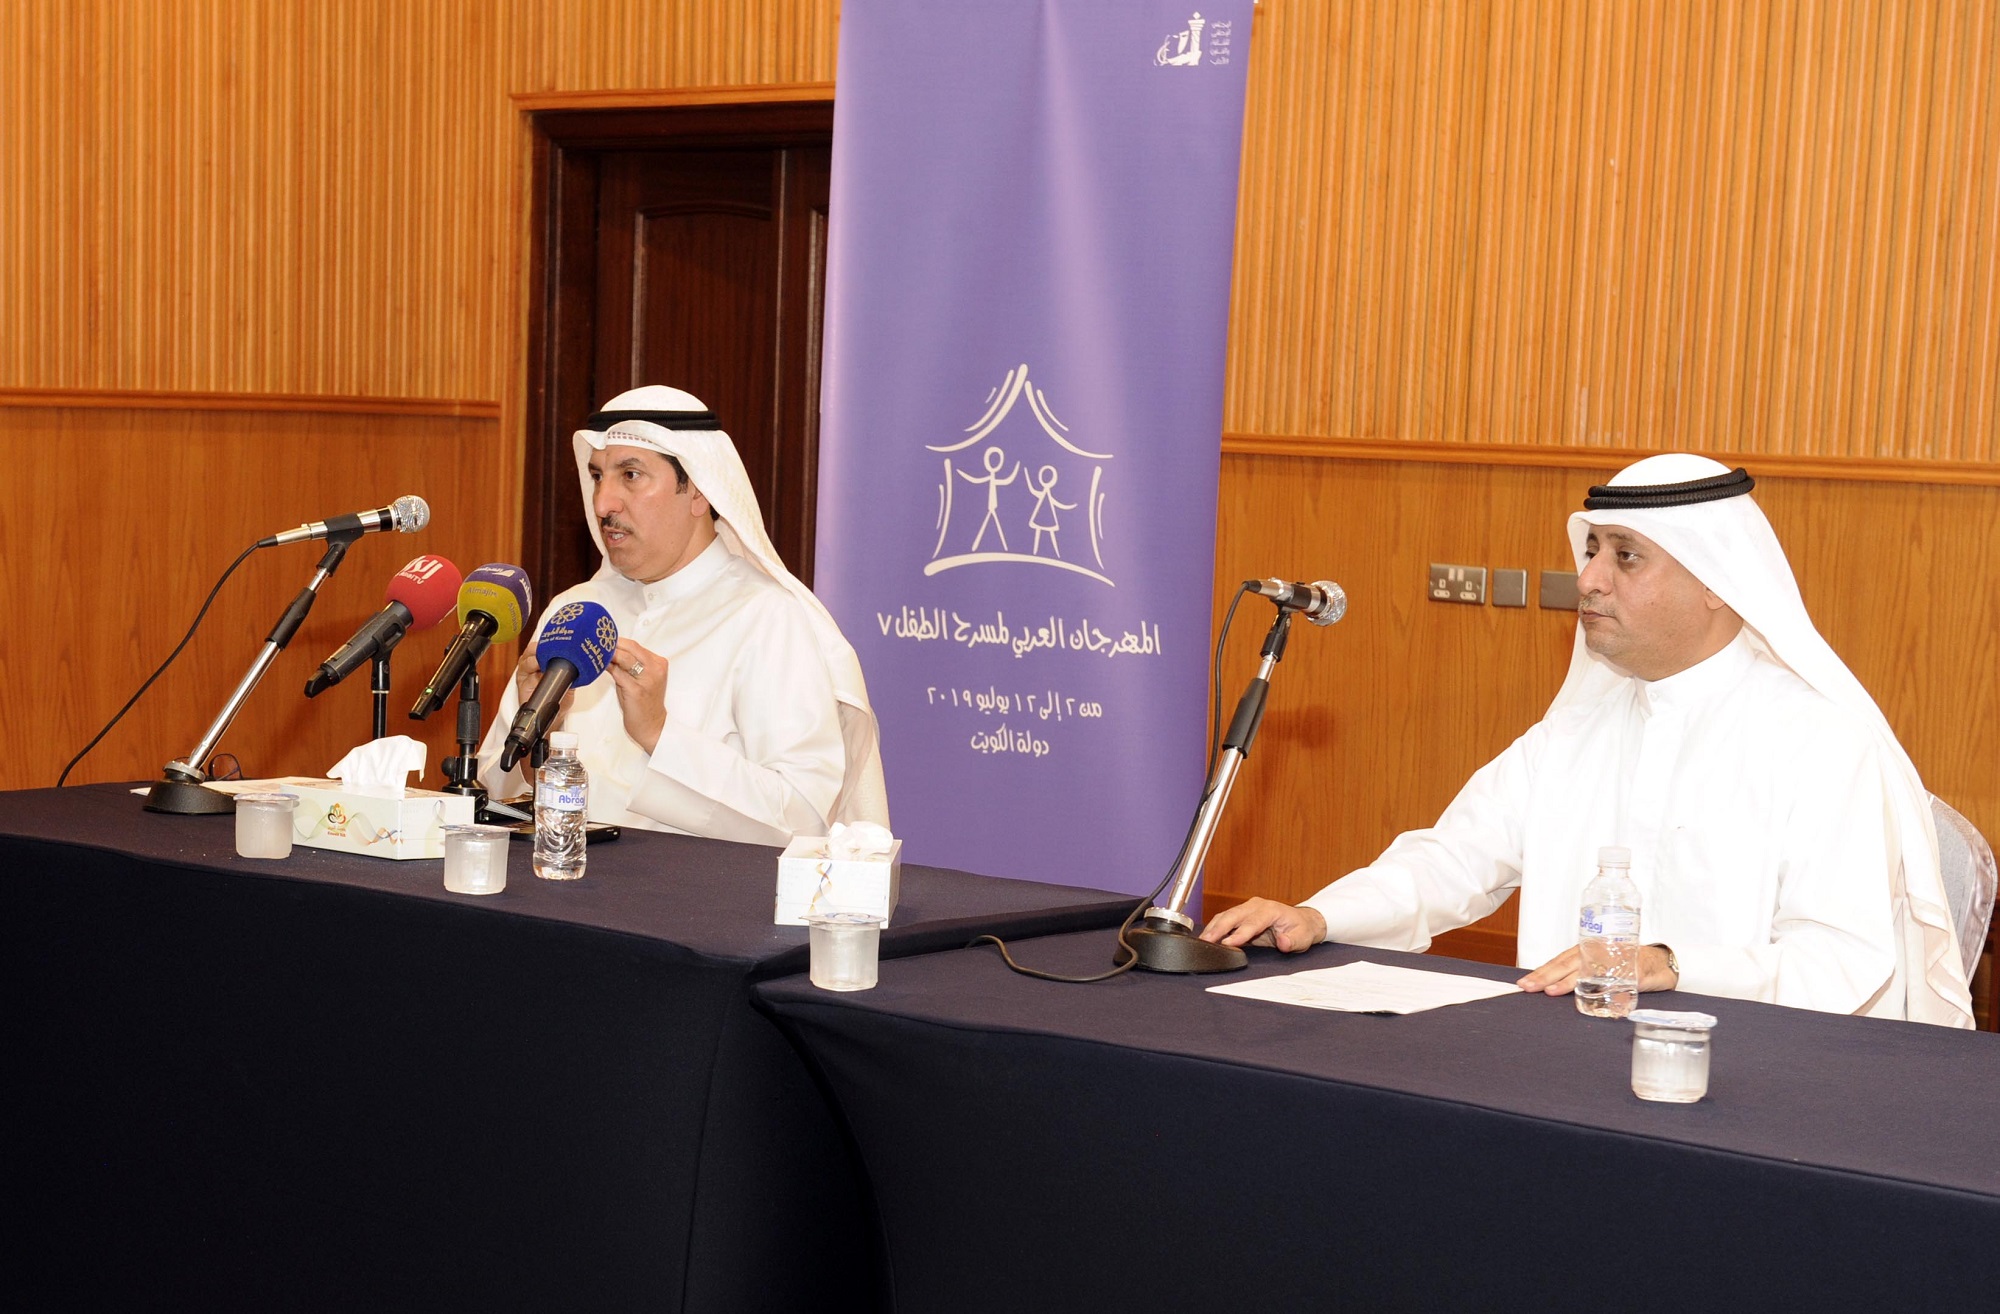 Dr. Bader Al-Duweesh and Ahmad Al-Tattan during the press conference